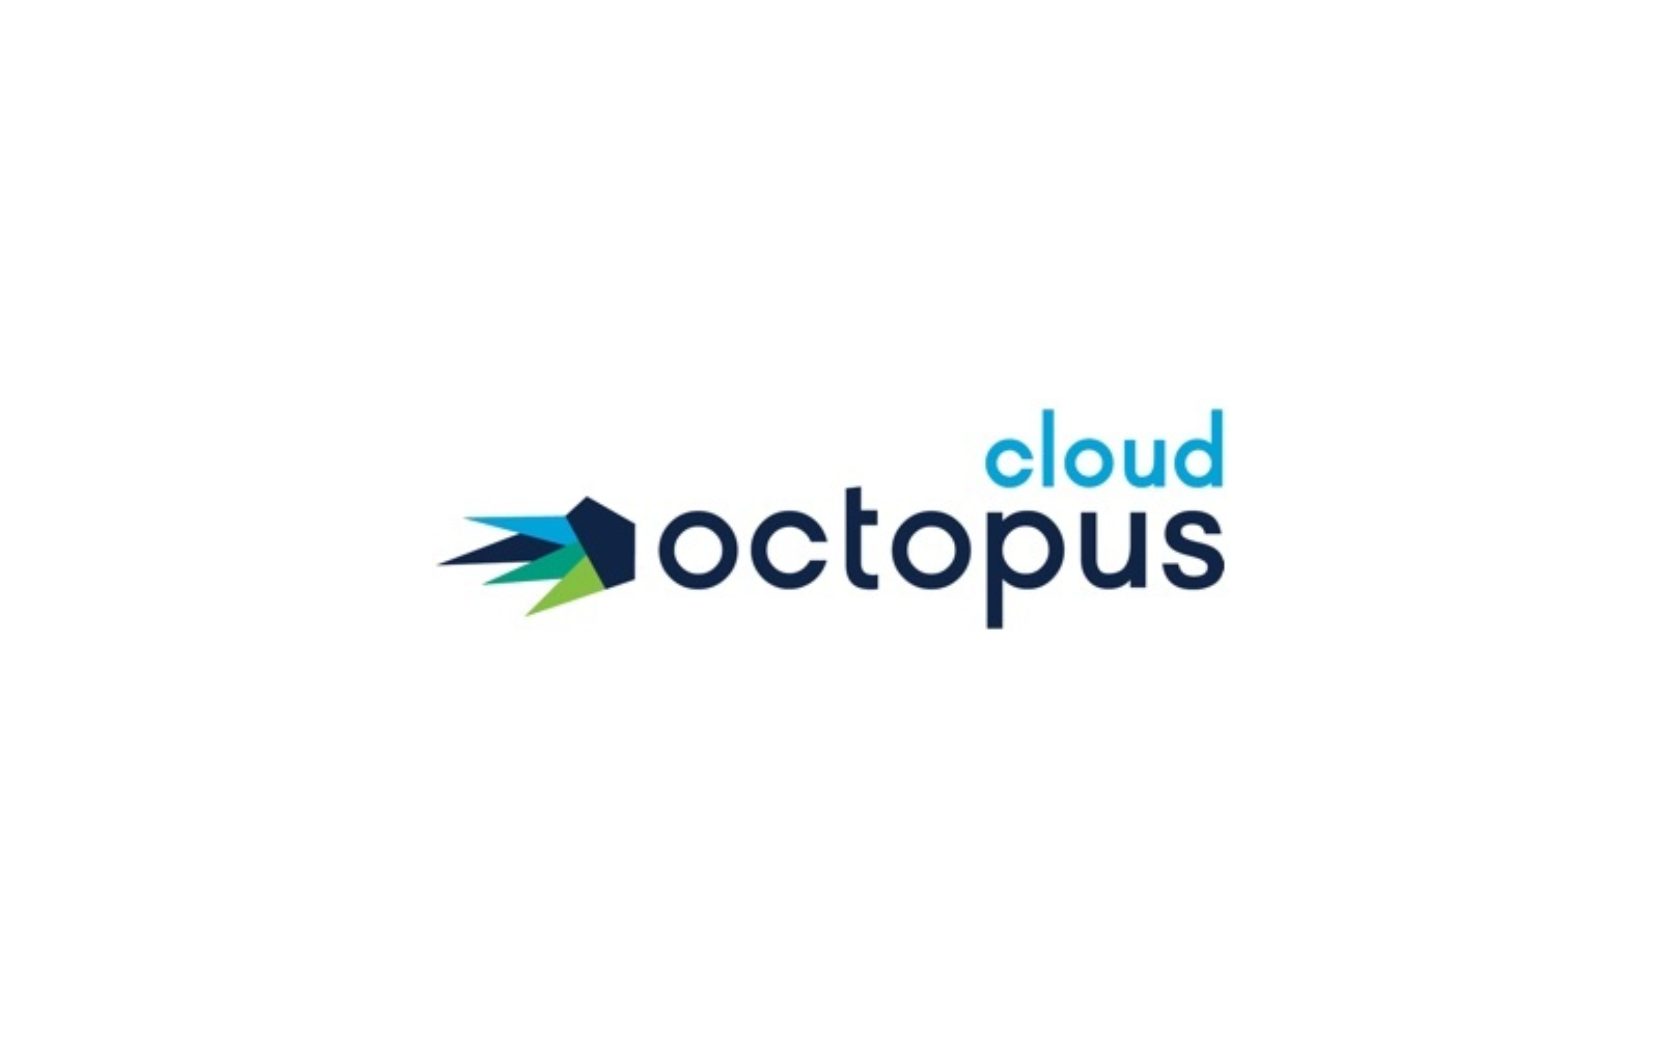 Octopus Cloud